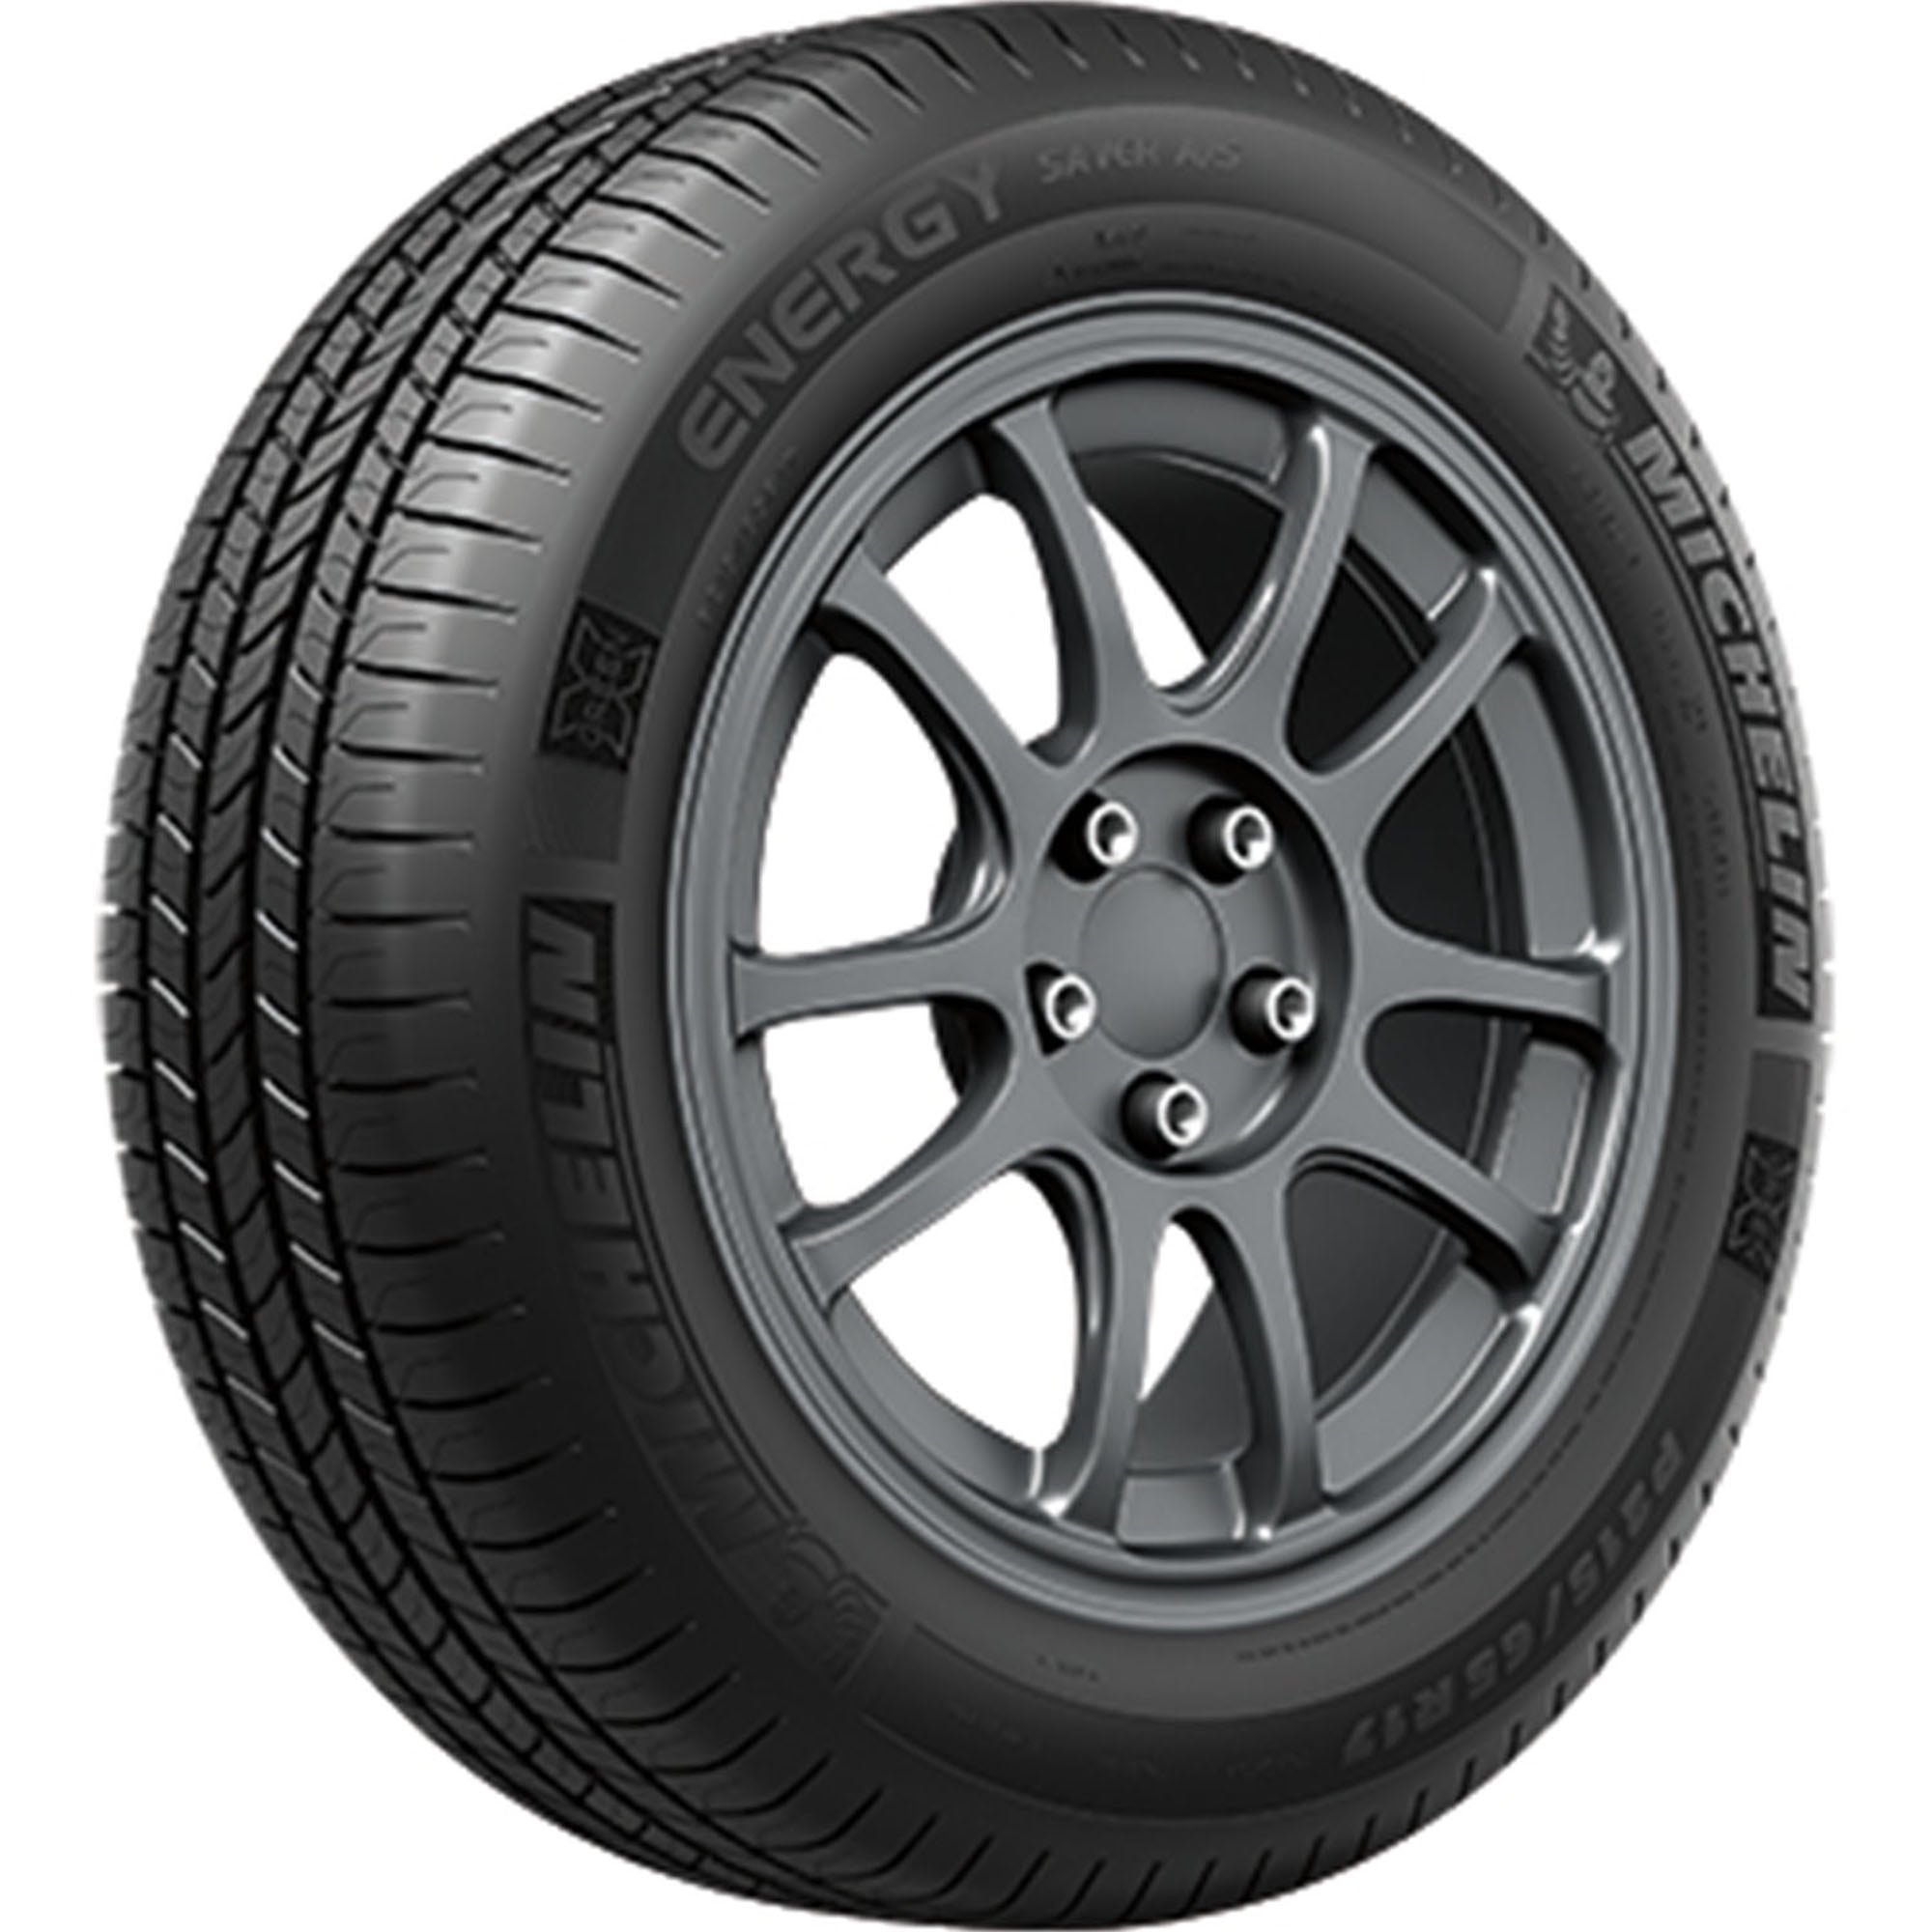 Michelin Energy Saver A/S 205/55R16 91H Passenger Tire Season All